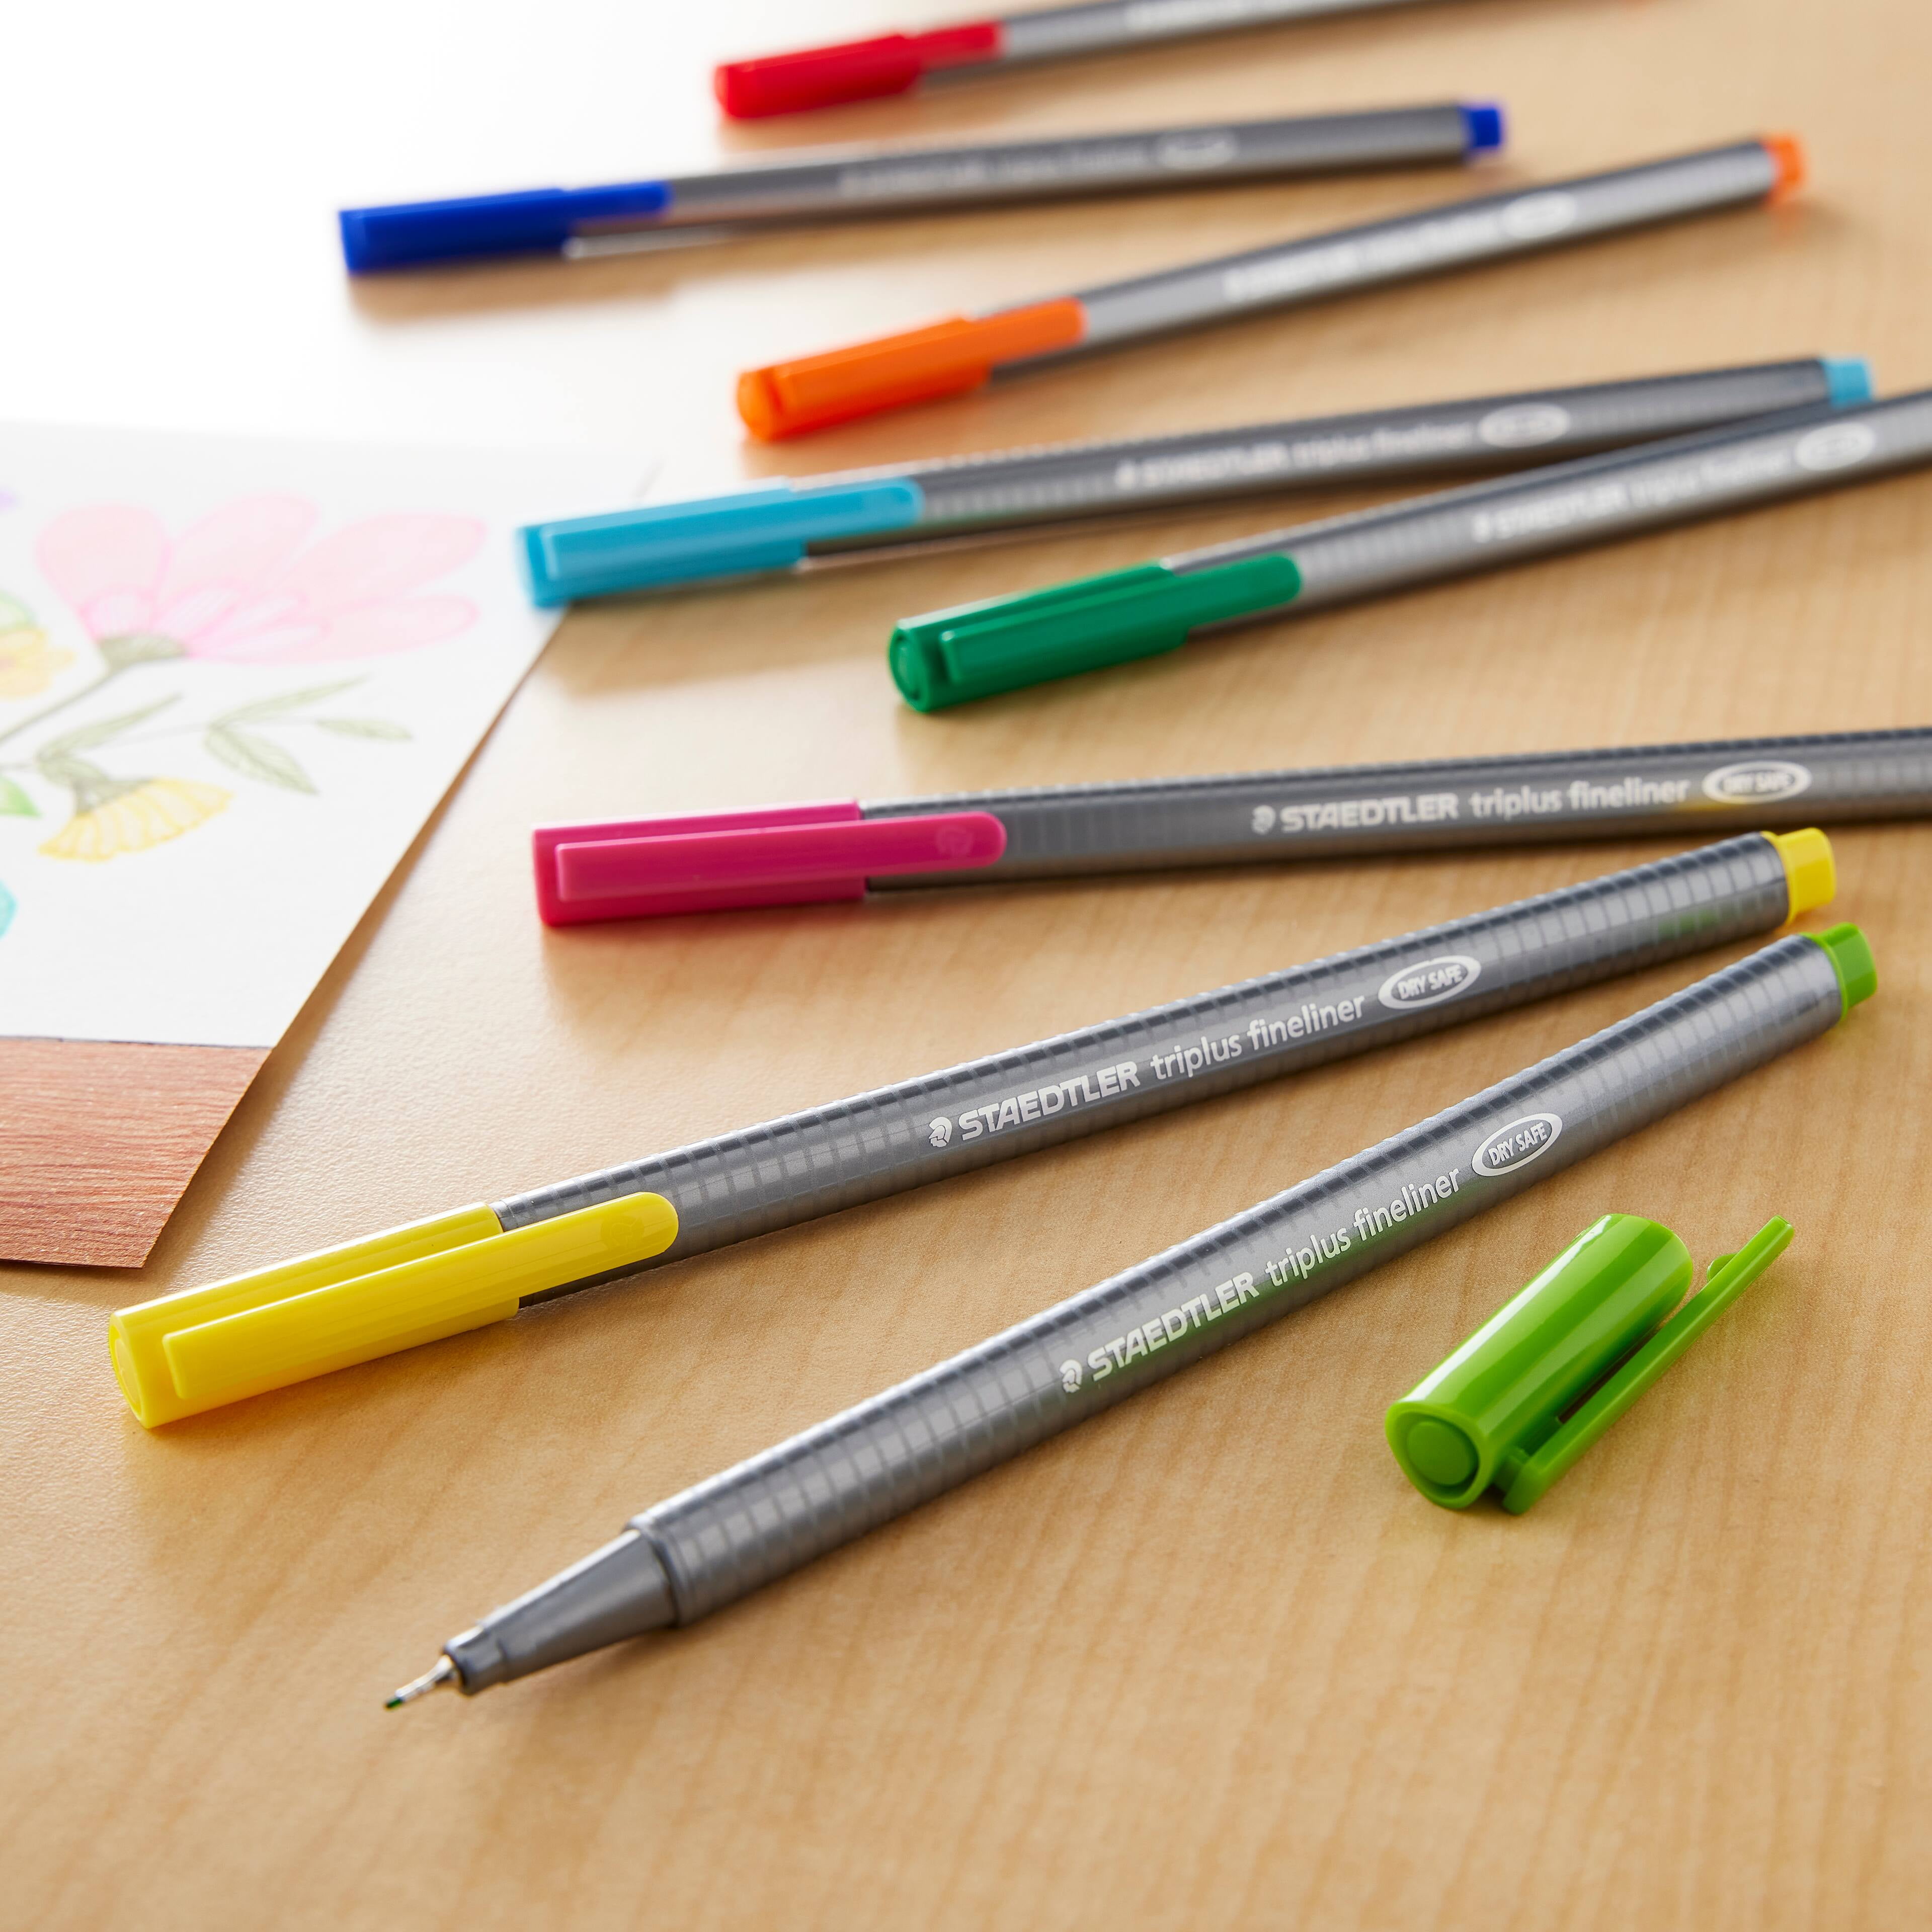 Staedtler Triplus Fineliner .3 mm Colored Pens- set of 20 — Two